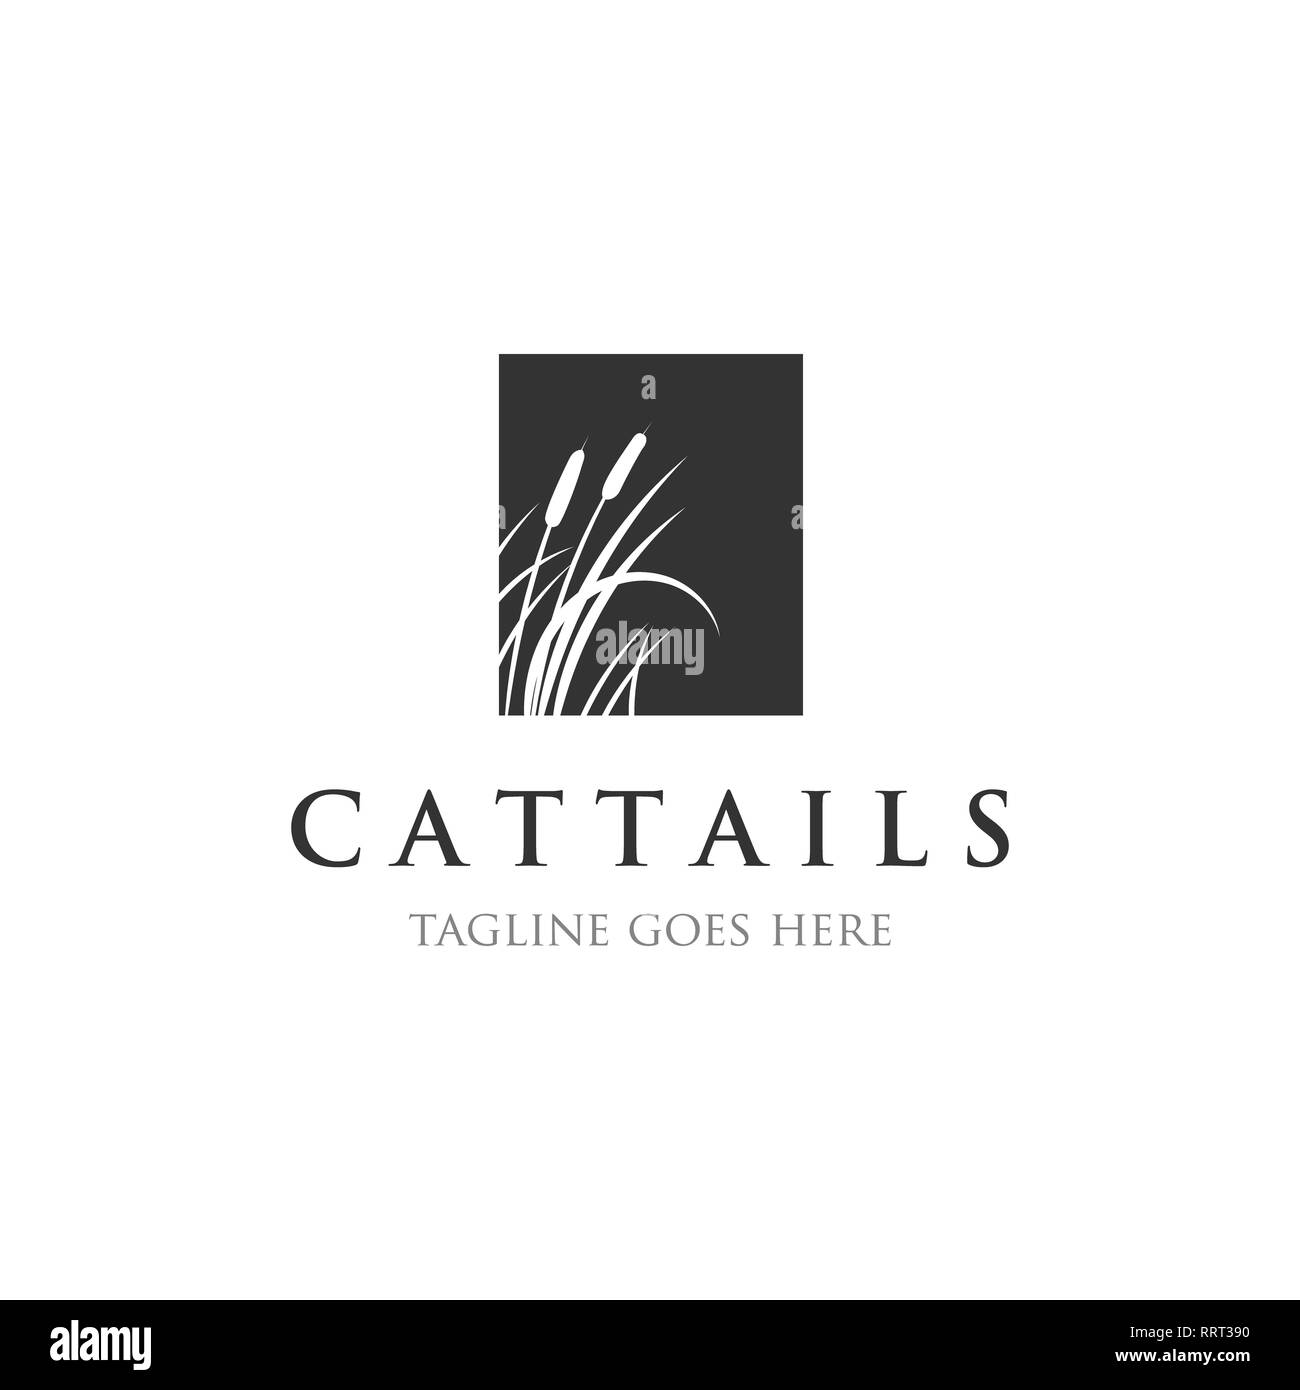 Cattails/Reed Logo Designs Inspirationen Stockfoto